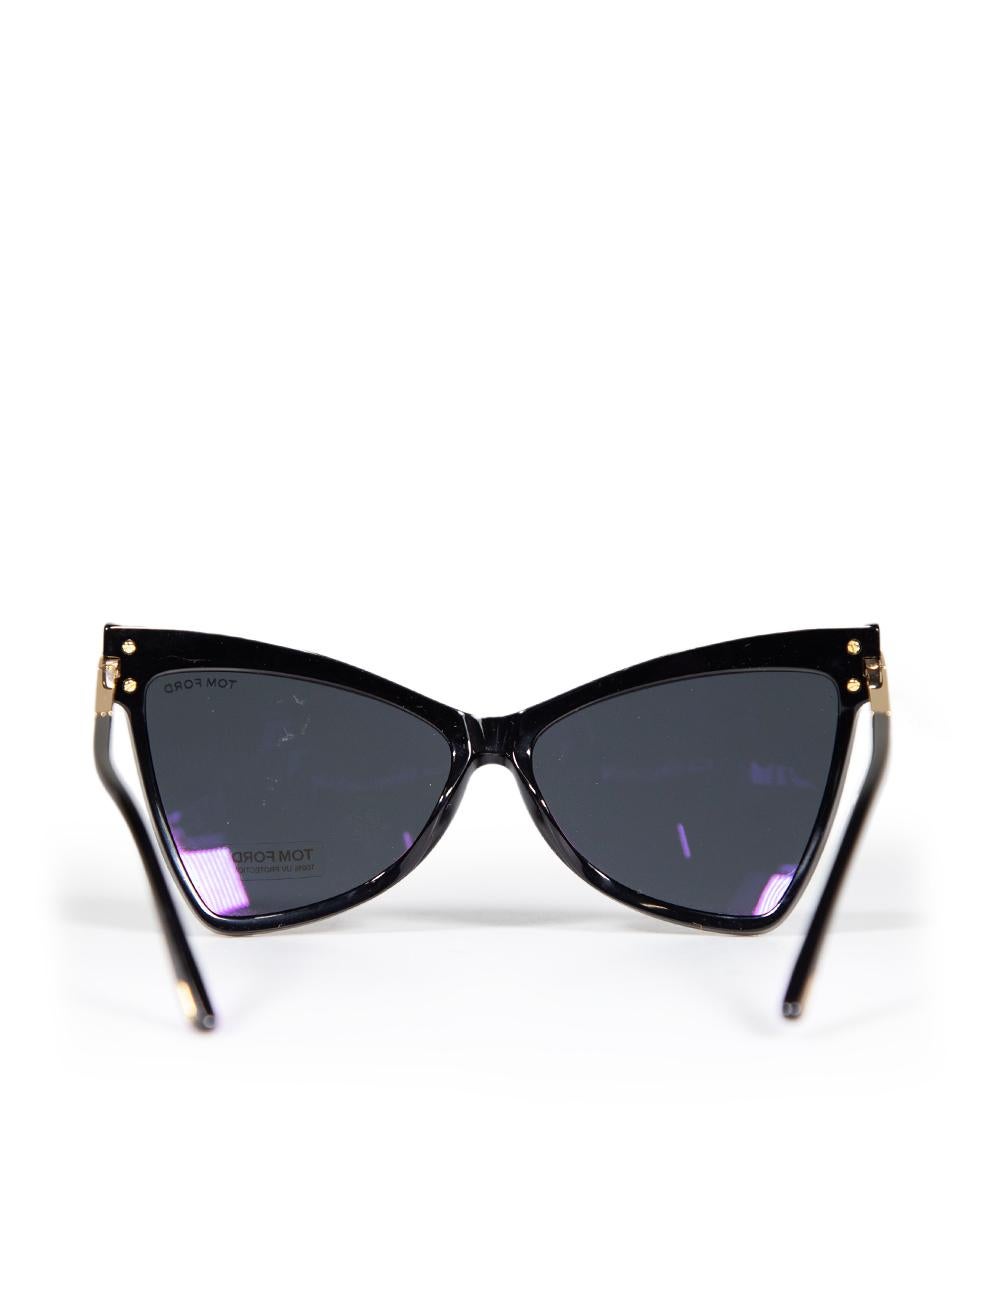 Women's Tom Ford Tallulah Shiny Black Butterfly Sunglasses For Sale